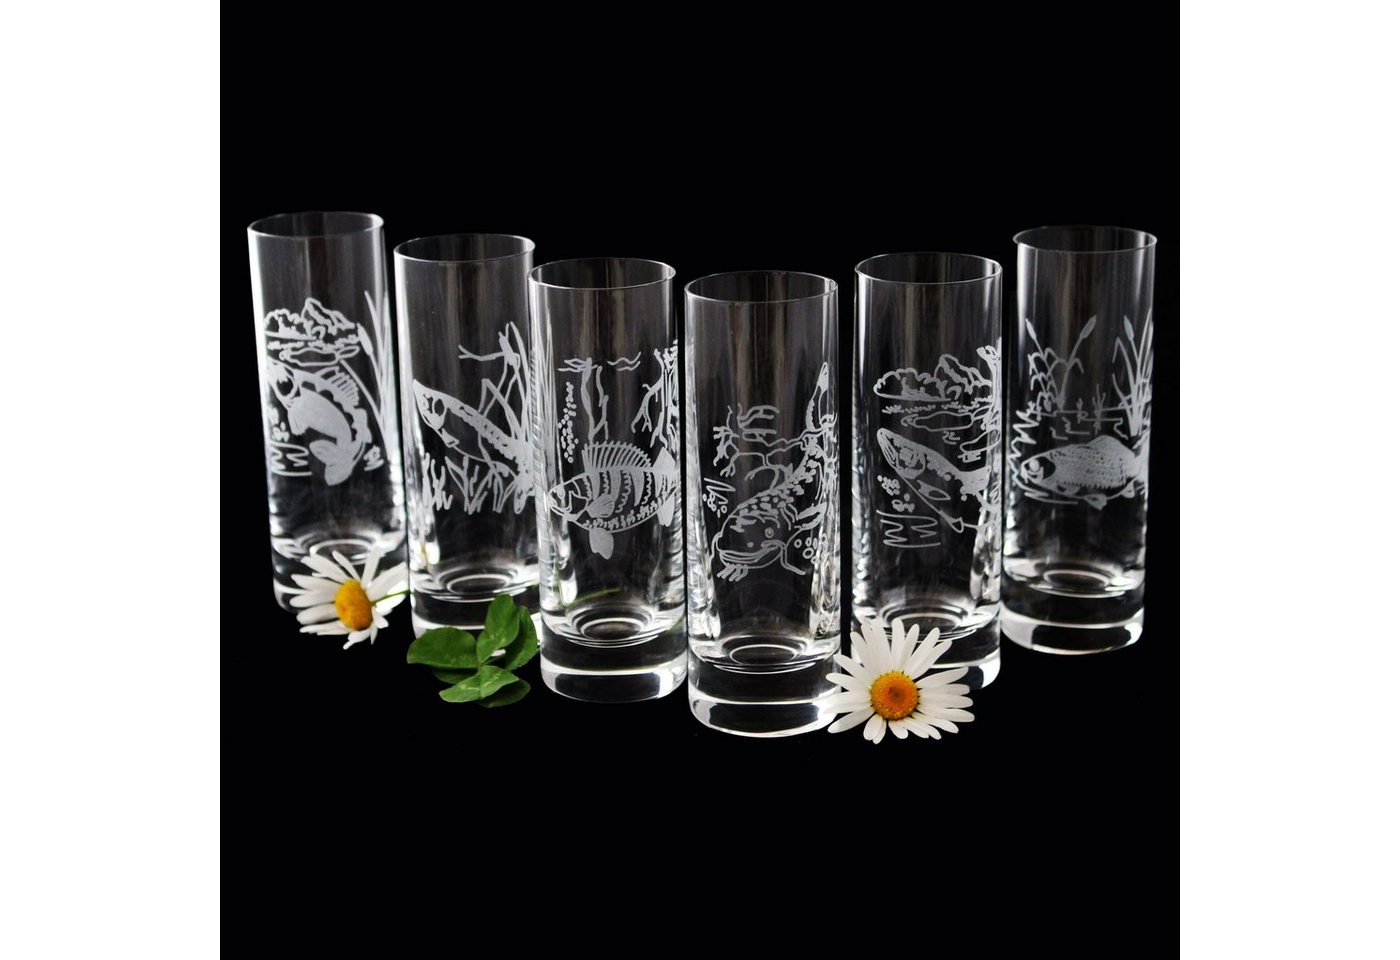 Bohemia Crystal Schnapsglas Barline, Kristallglas, veredelt mit Gravur, 6-teilig, Inhalt 50 ml, Schnapsglas-Set von Bohemia Crystal